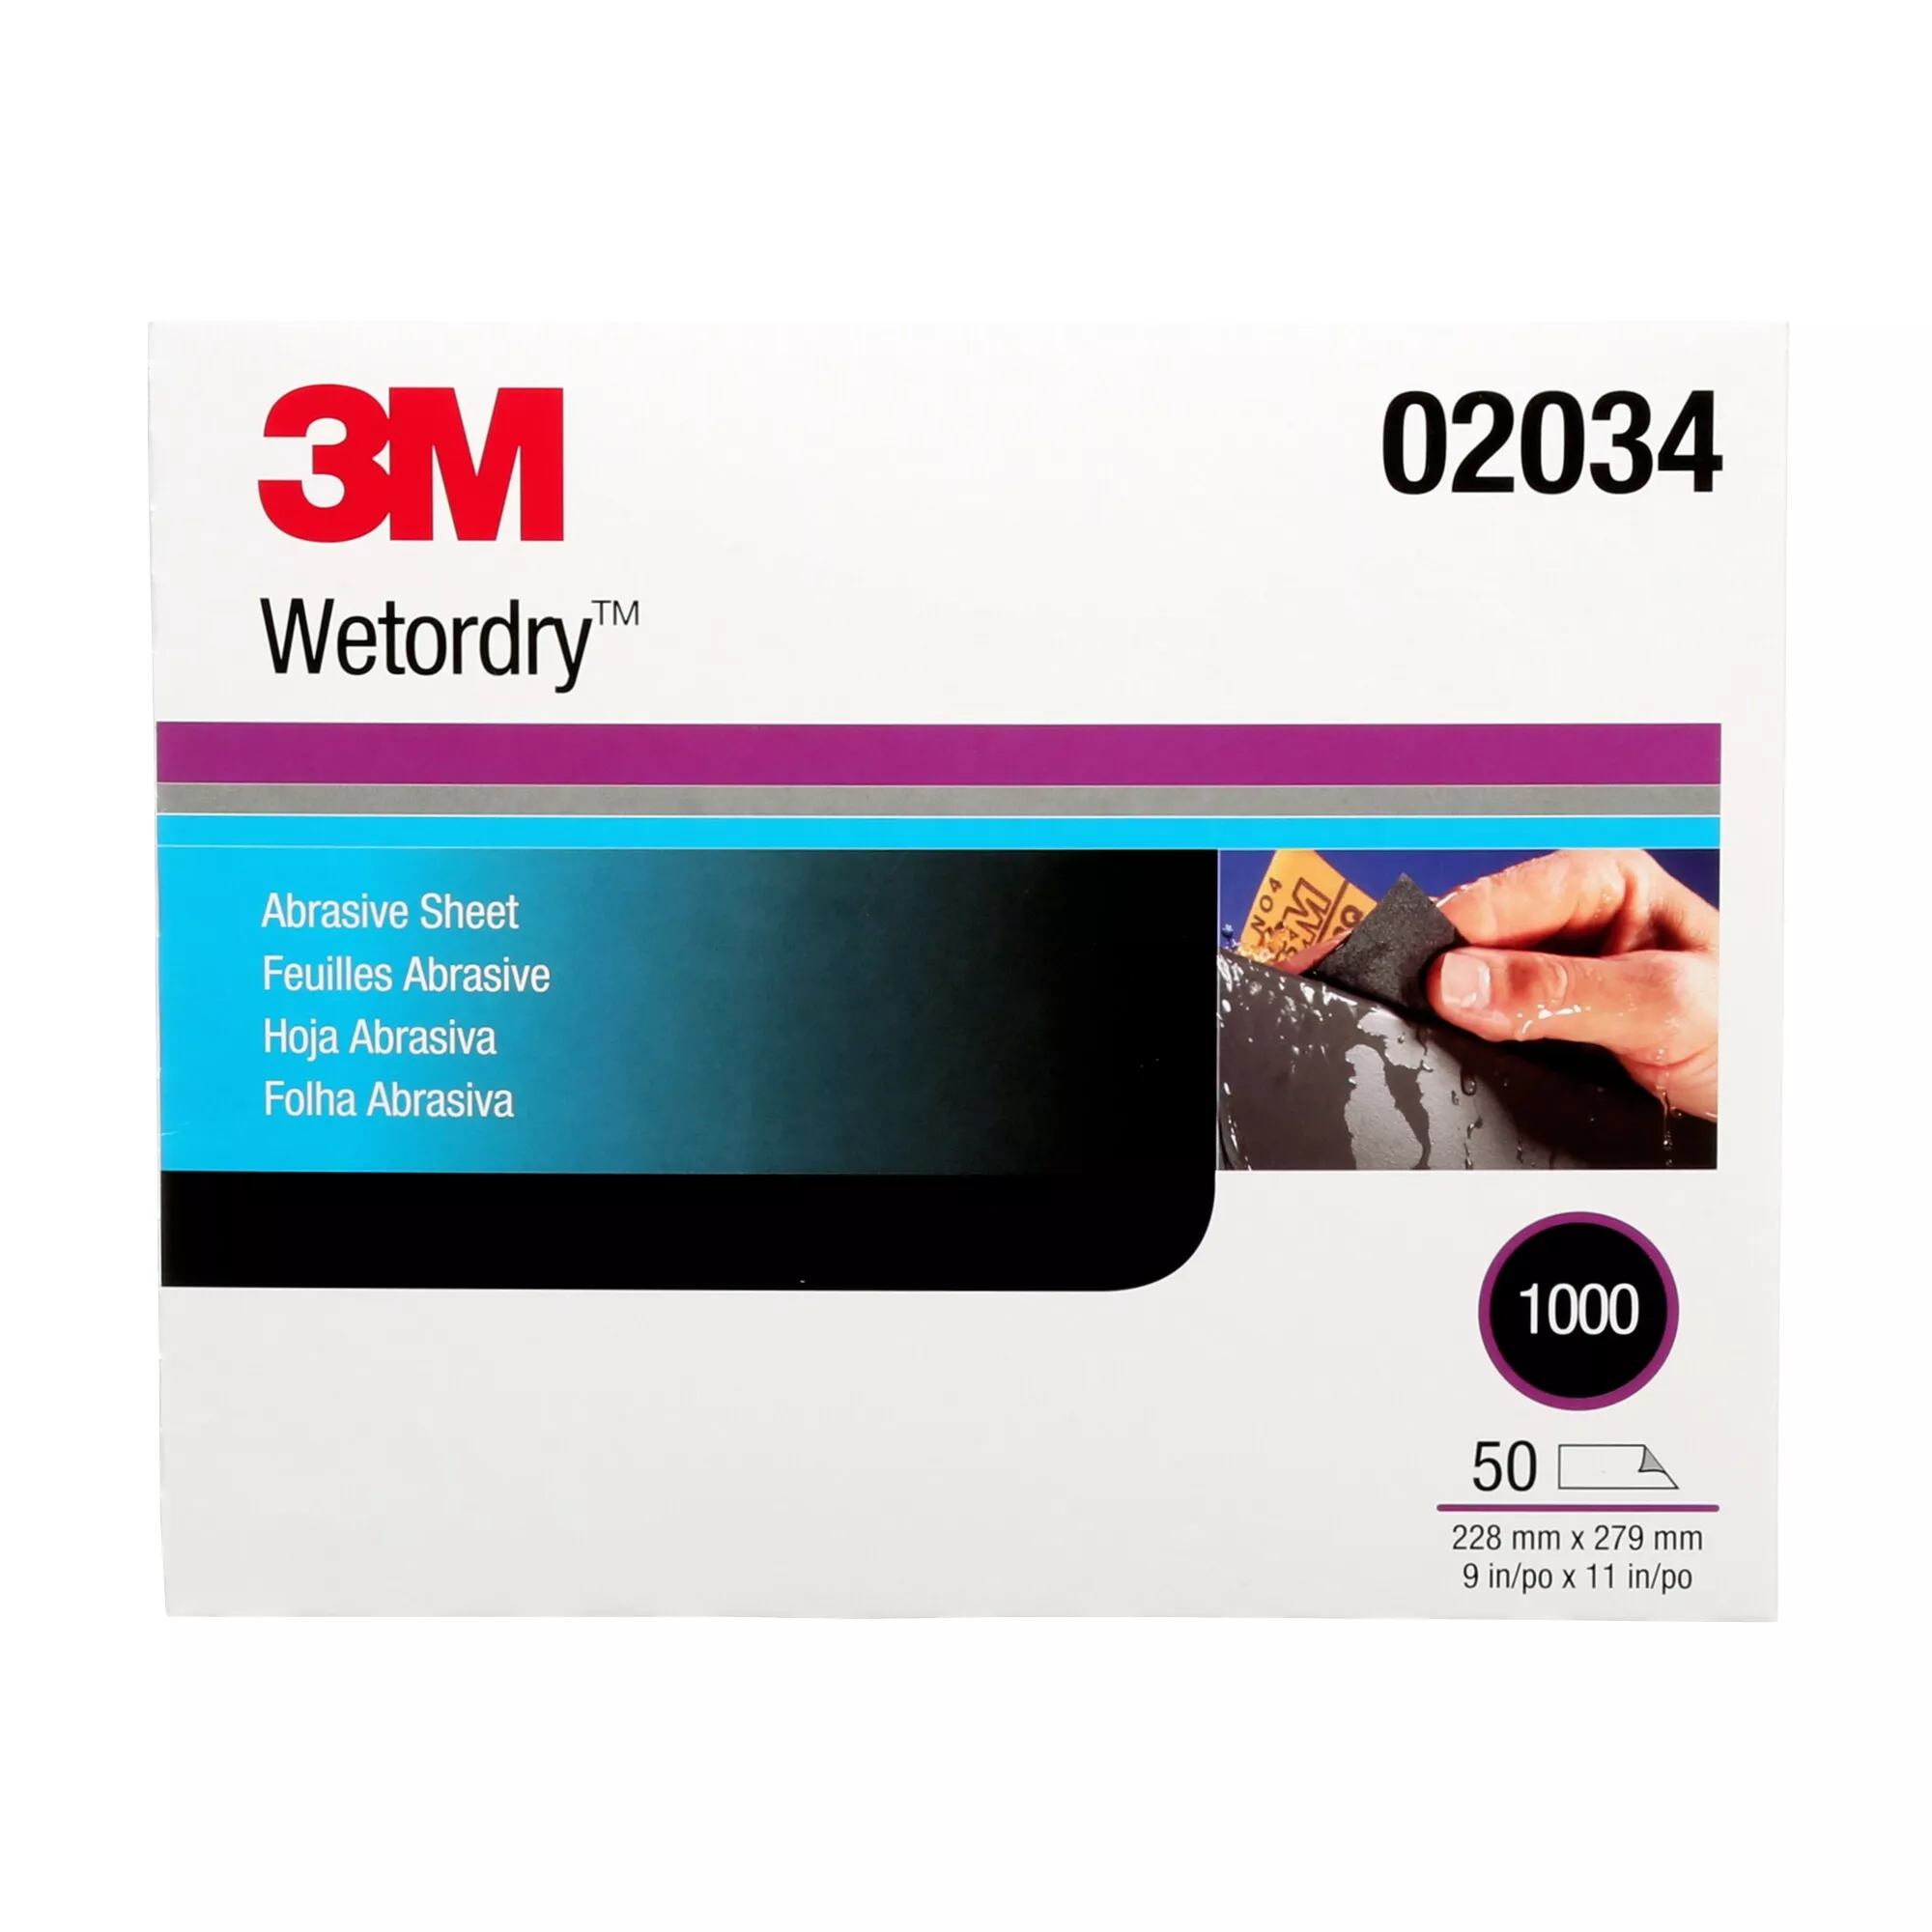 Product Number 401Q | 3M™ Wetordry™ Abrasive Sheet